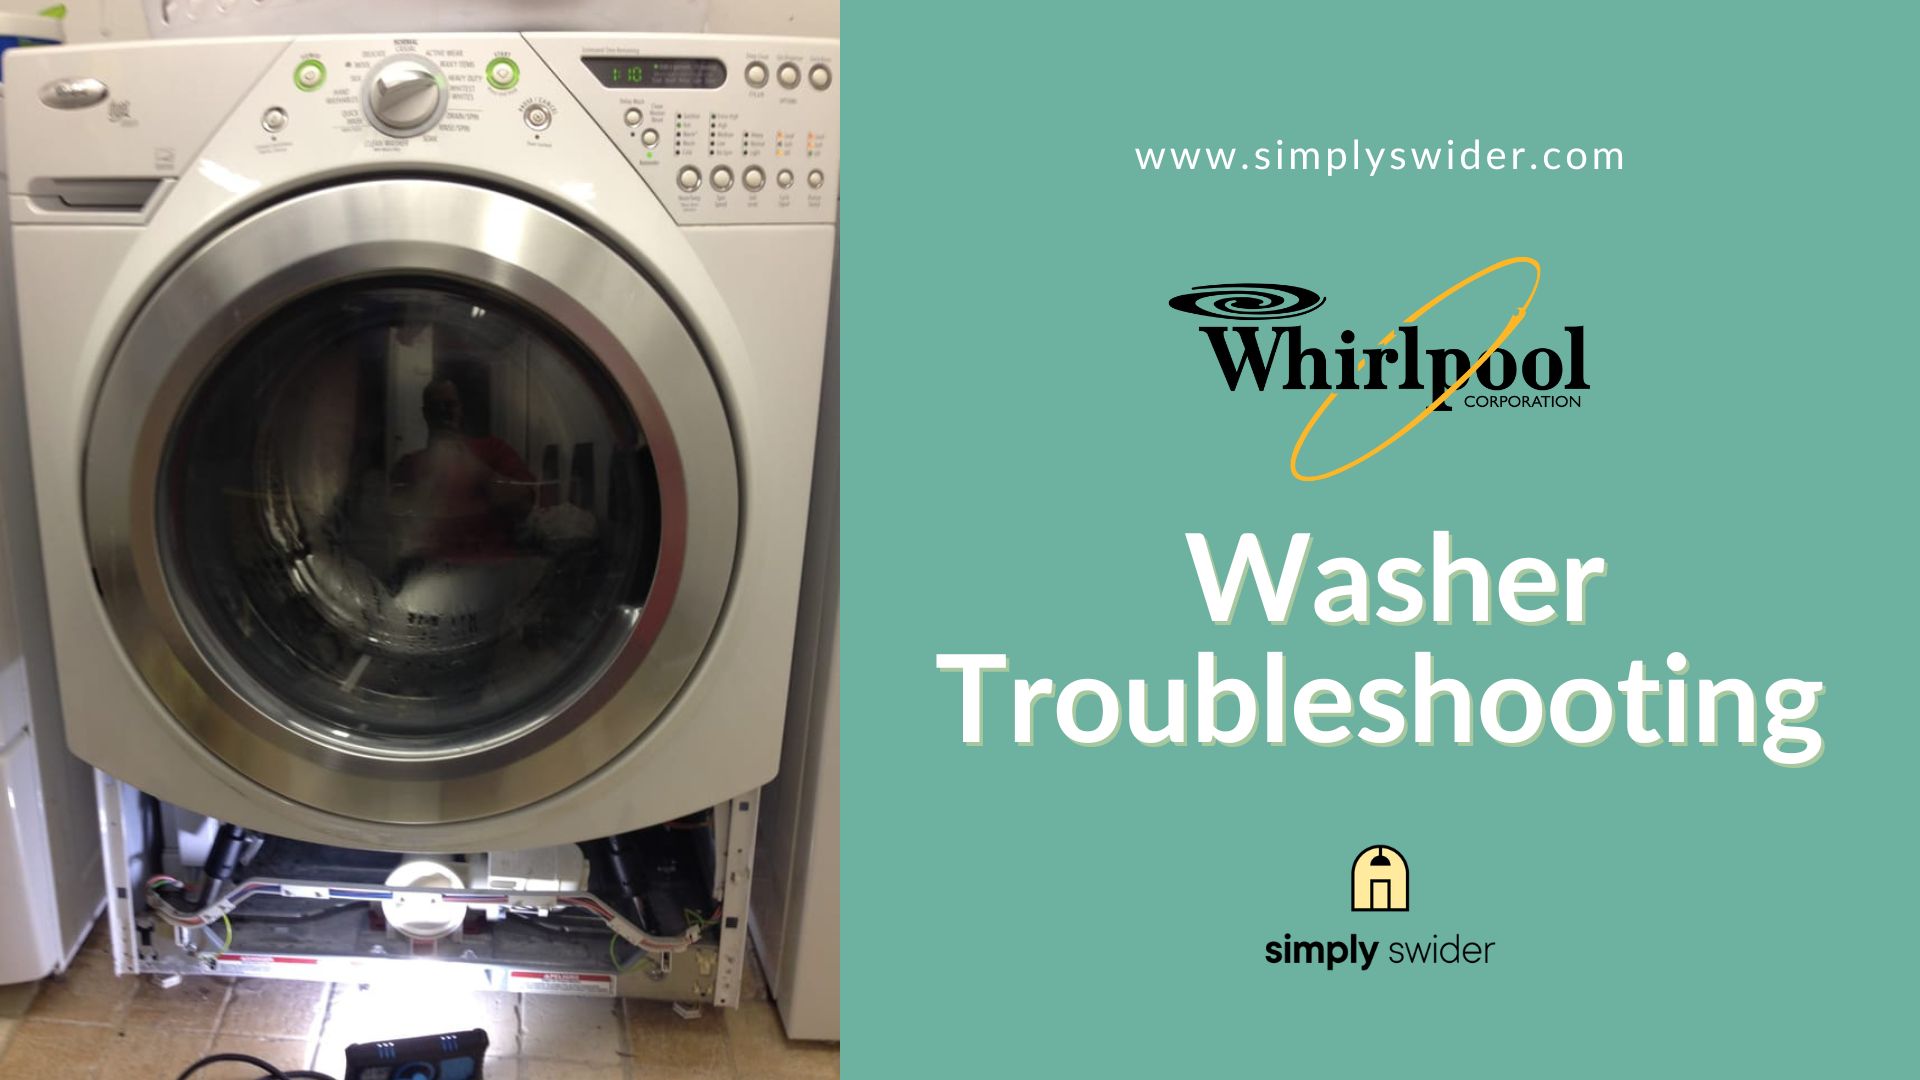 Whirlpool Washer Troubleshooting